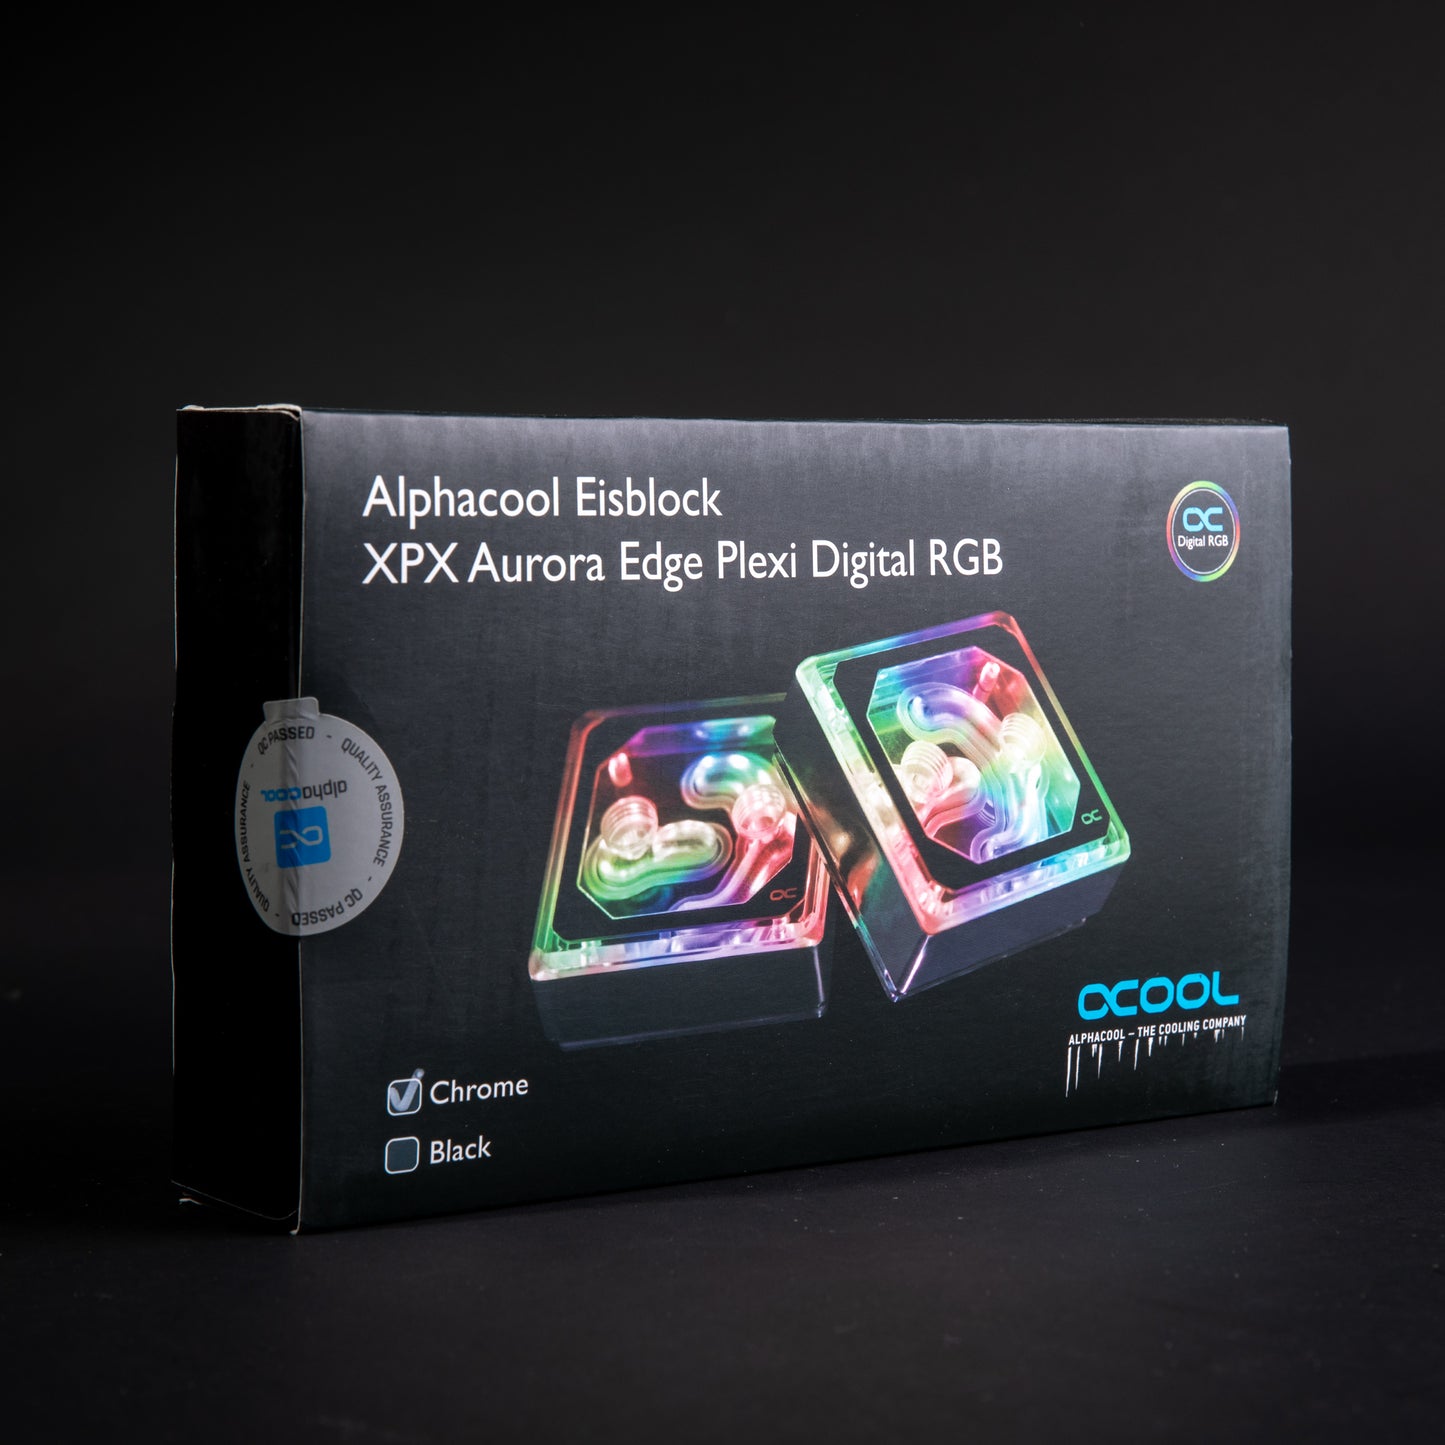 Alphacool Eisblock XPX Aurora Edge - Acryl Chrome Digital RGB CPU Water Block Ordinary Cooling Gear